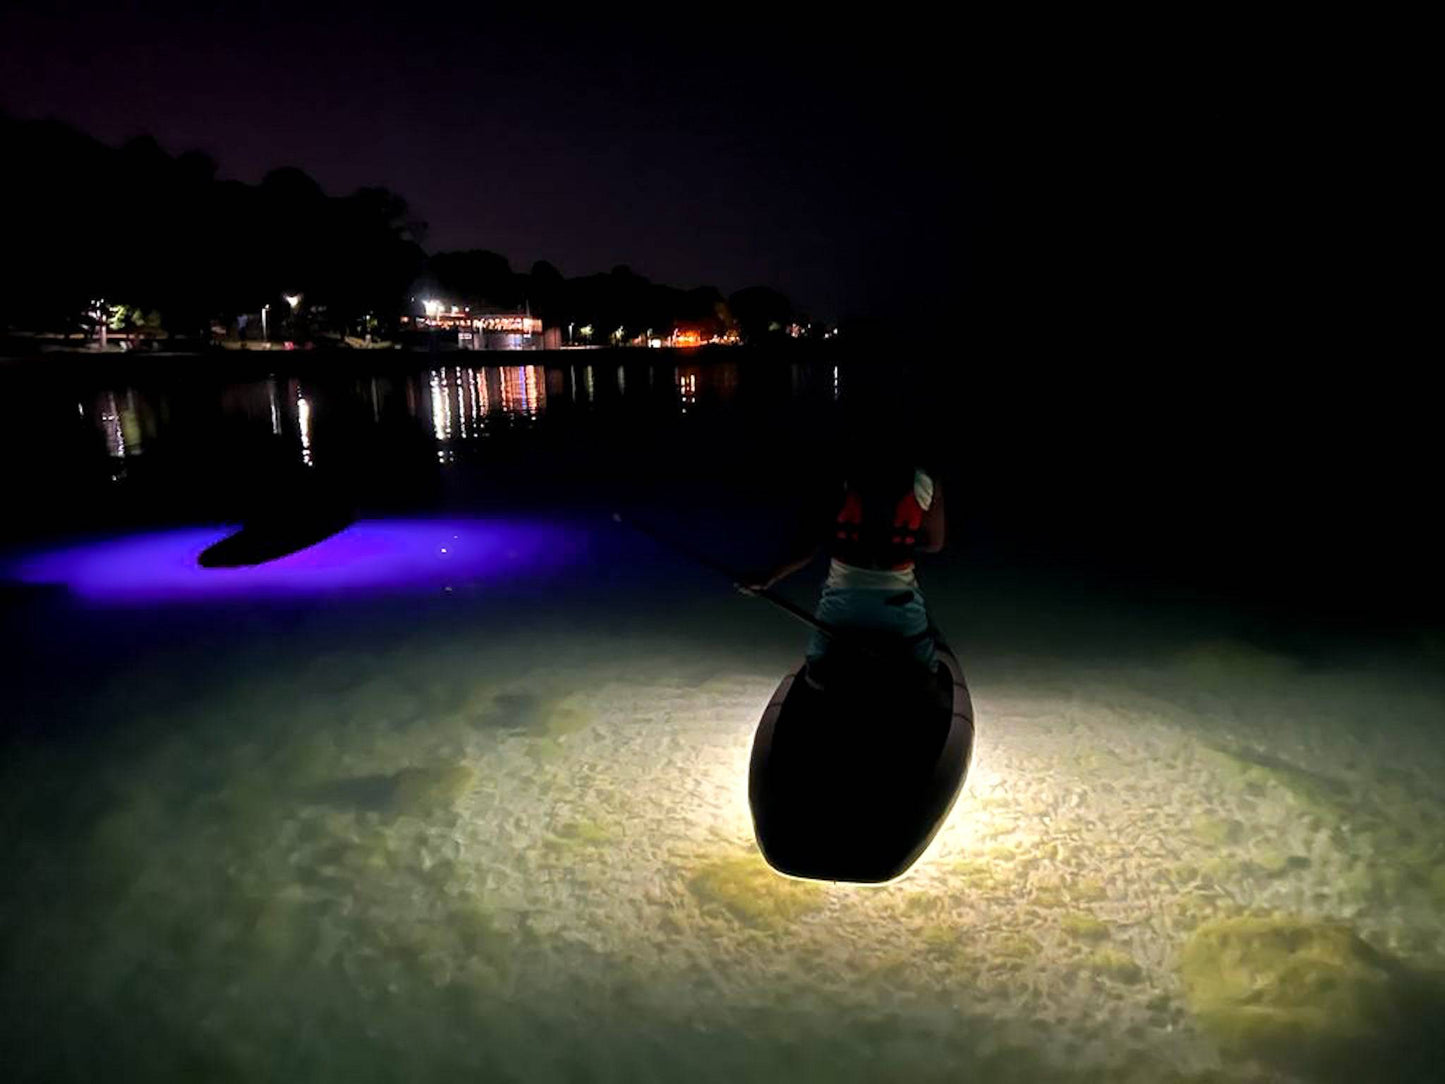 Aurora Explorer bright white light illuminates the bottom of the lake below the paddle board.